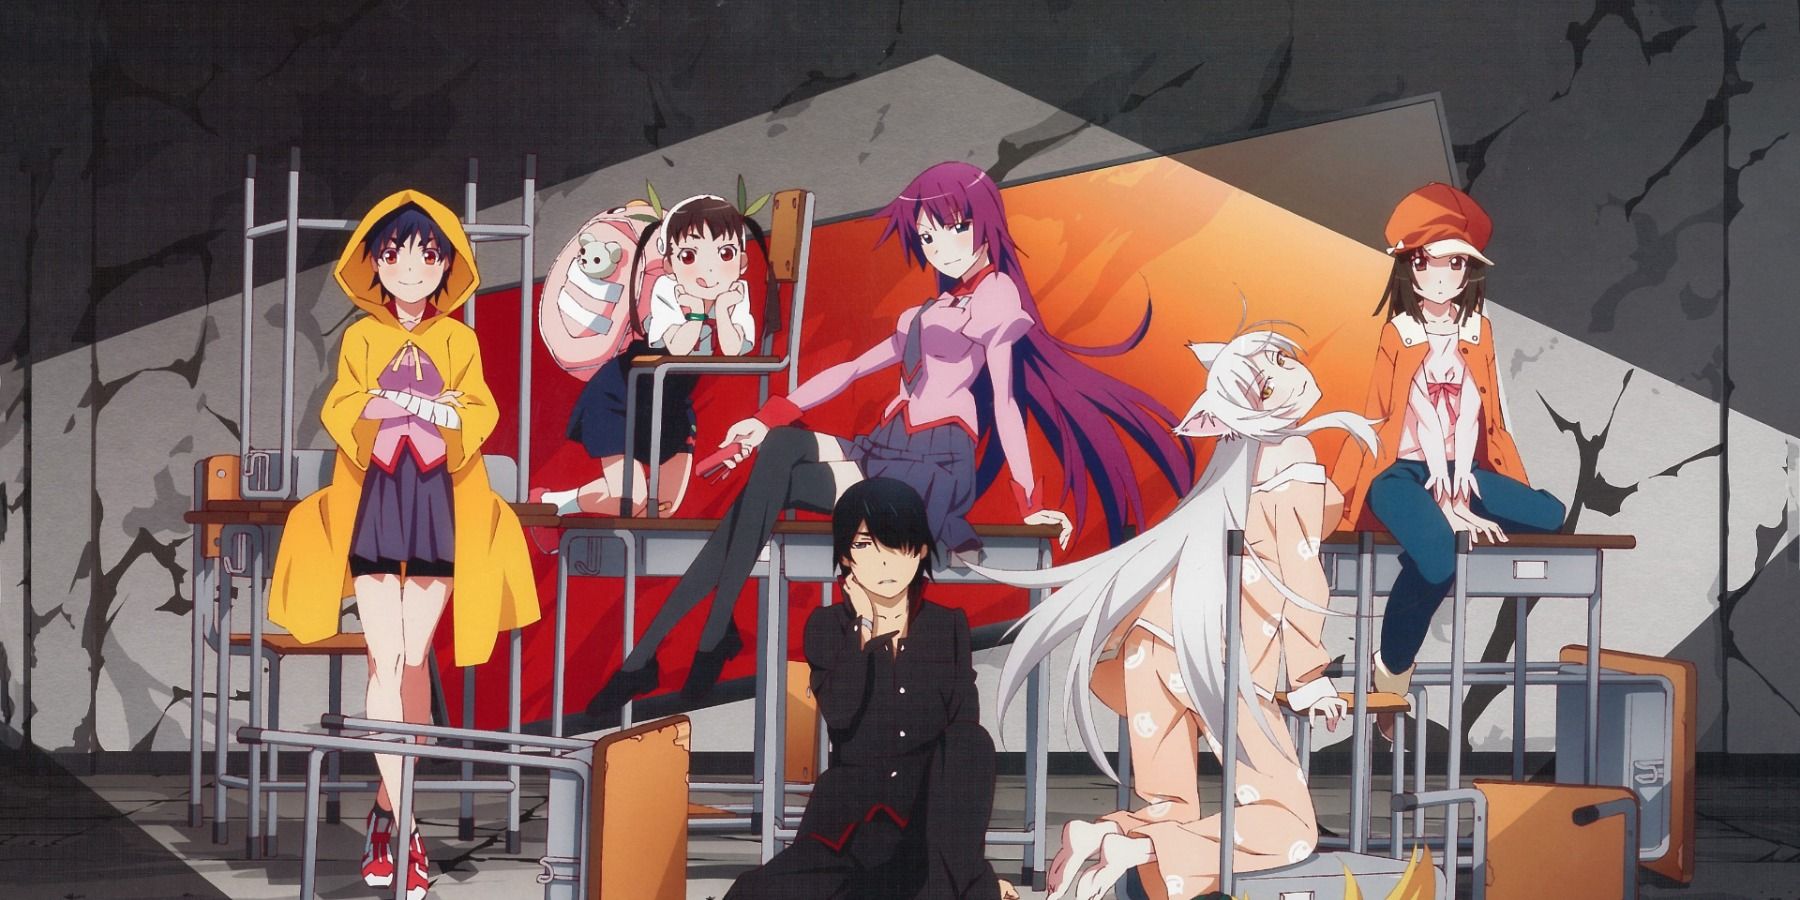 The main cast of anime series Monogatari posed around classroom desks